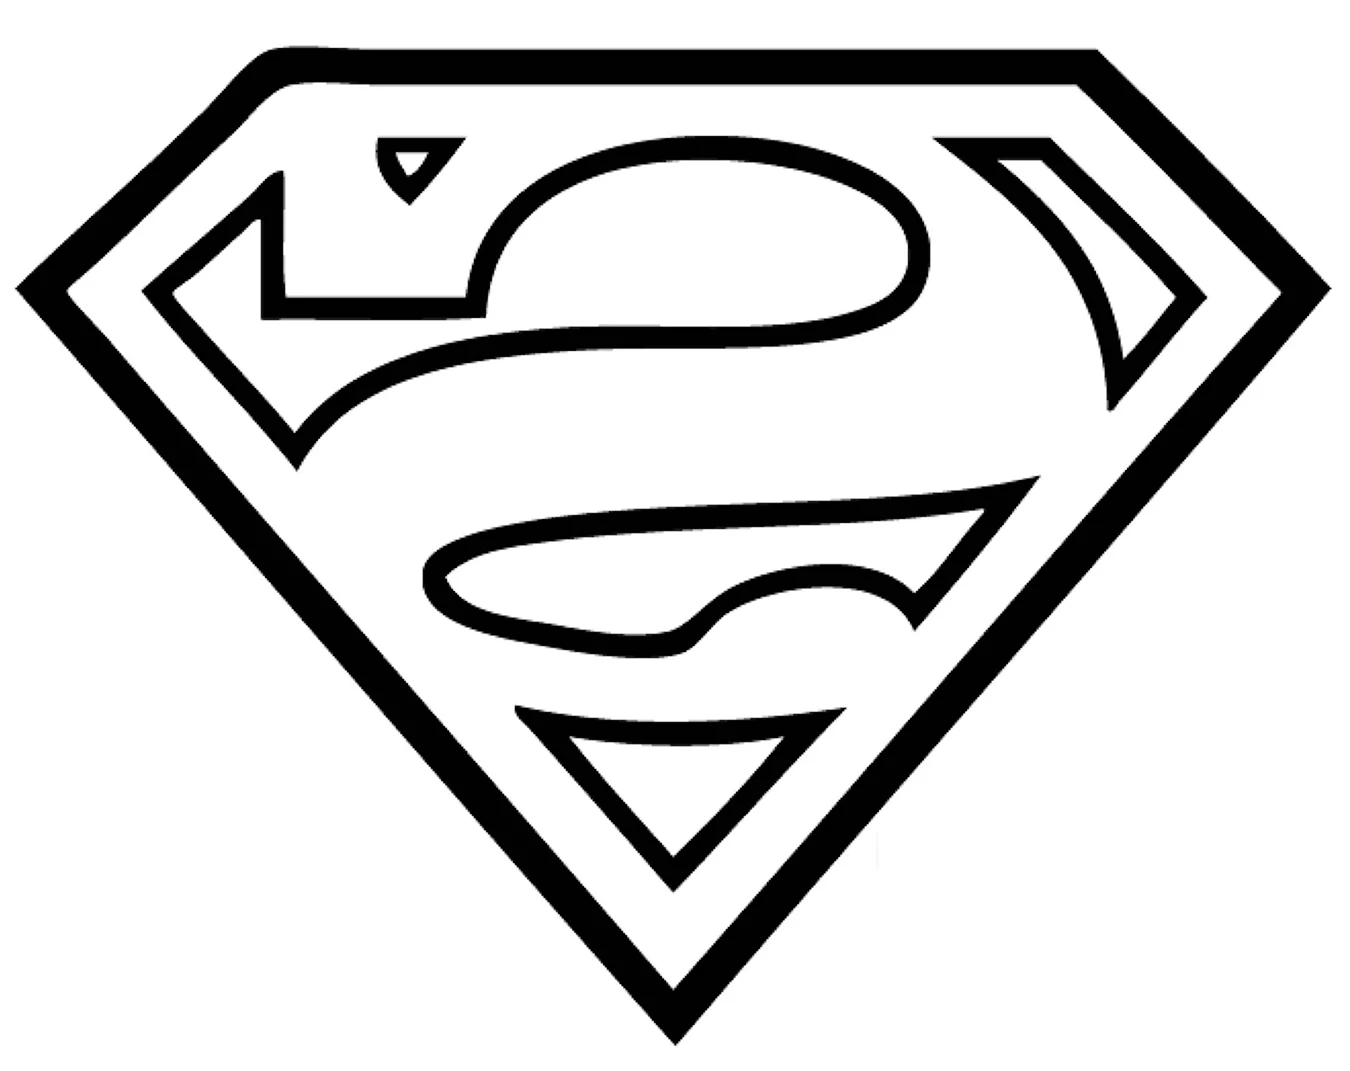 Эмблема Супермена